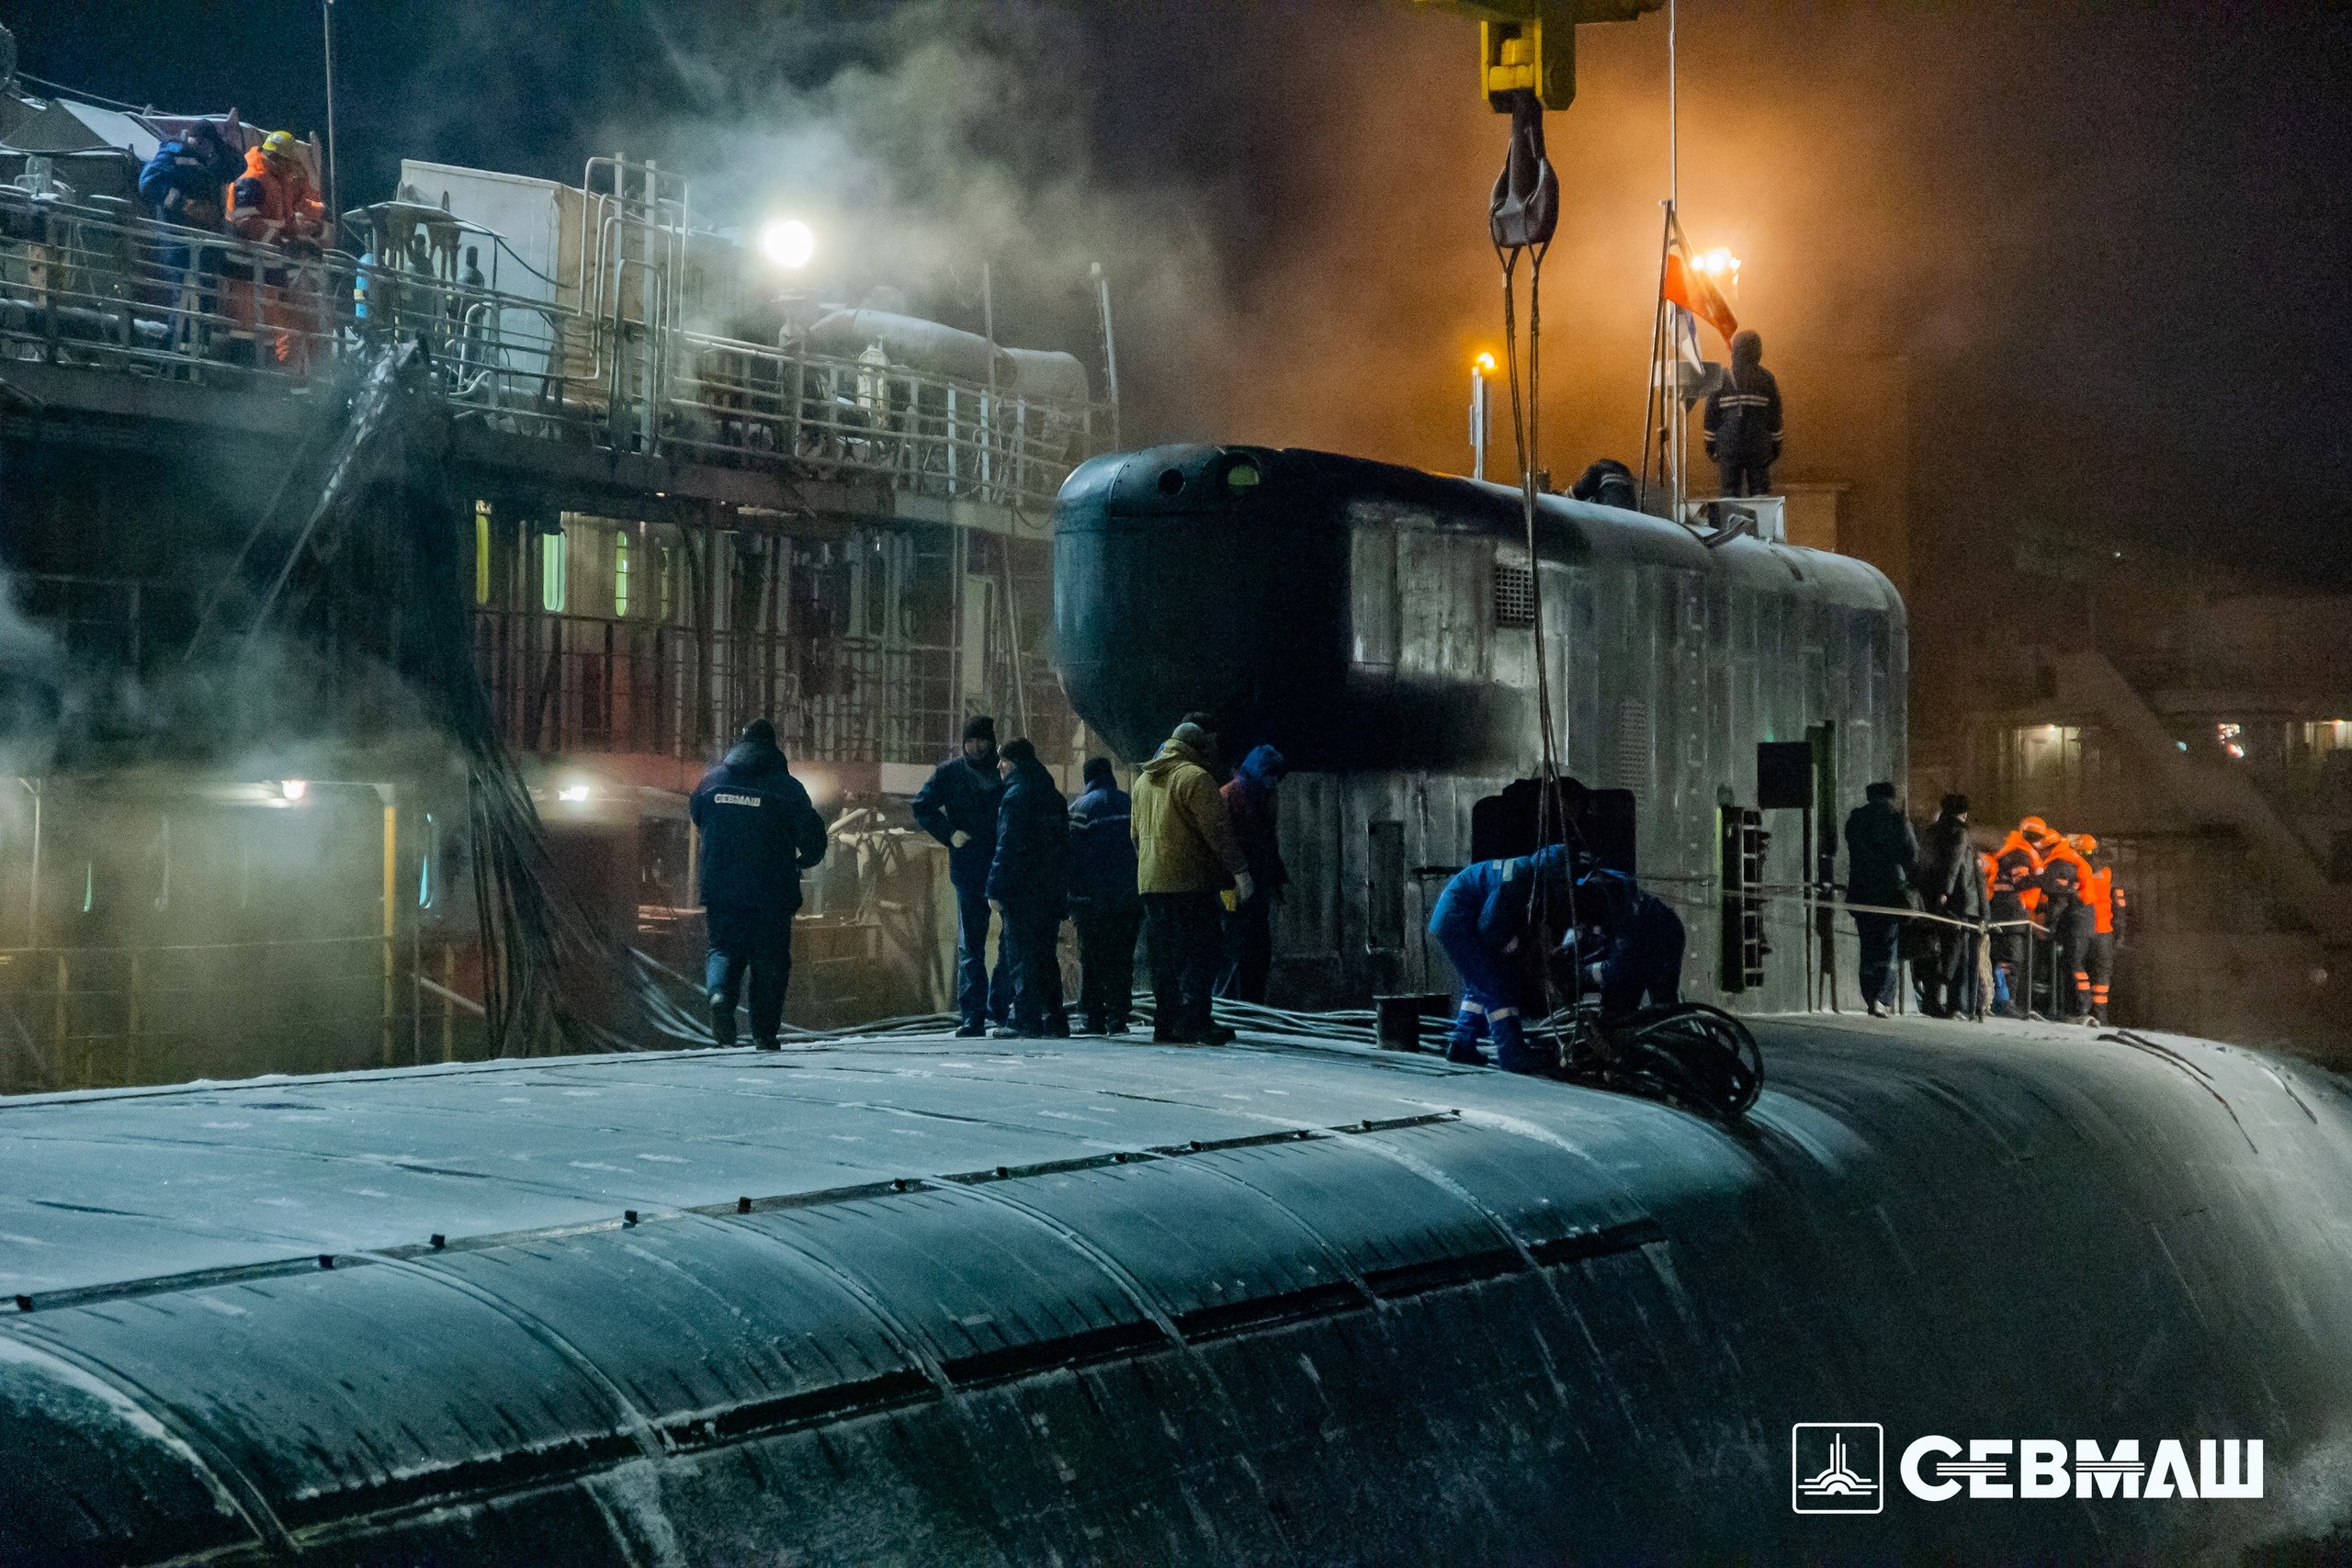 Служба апл. Севмаш Северодвинск подводная лодка. Северодвинск завод подводных лодок. Подводная лодка Борей на Севмаш.